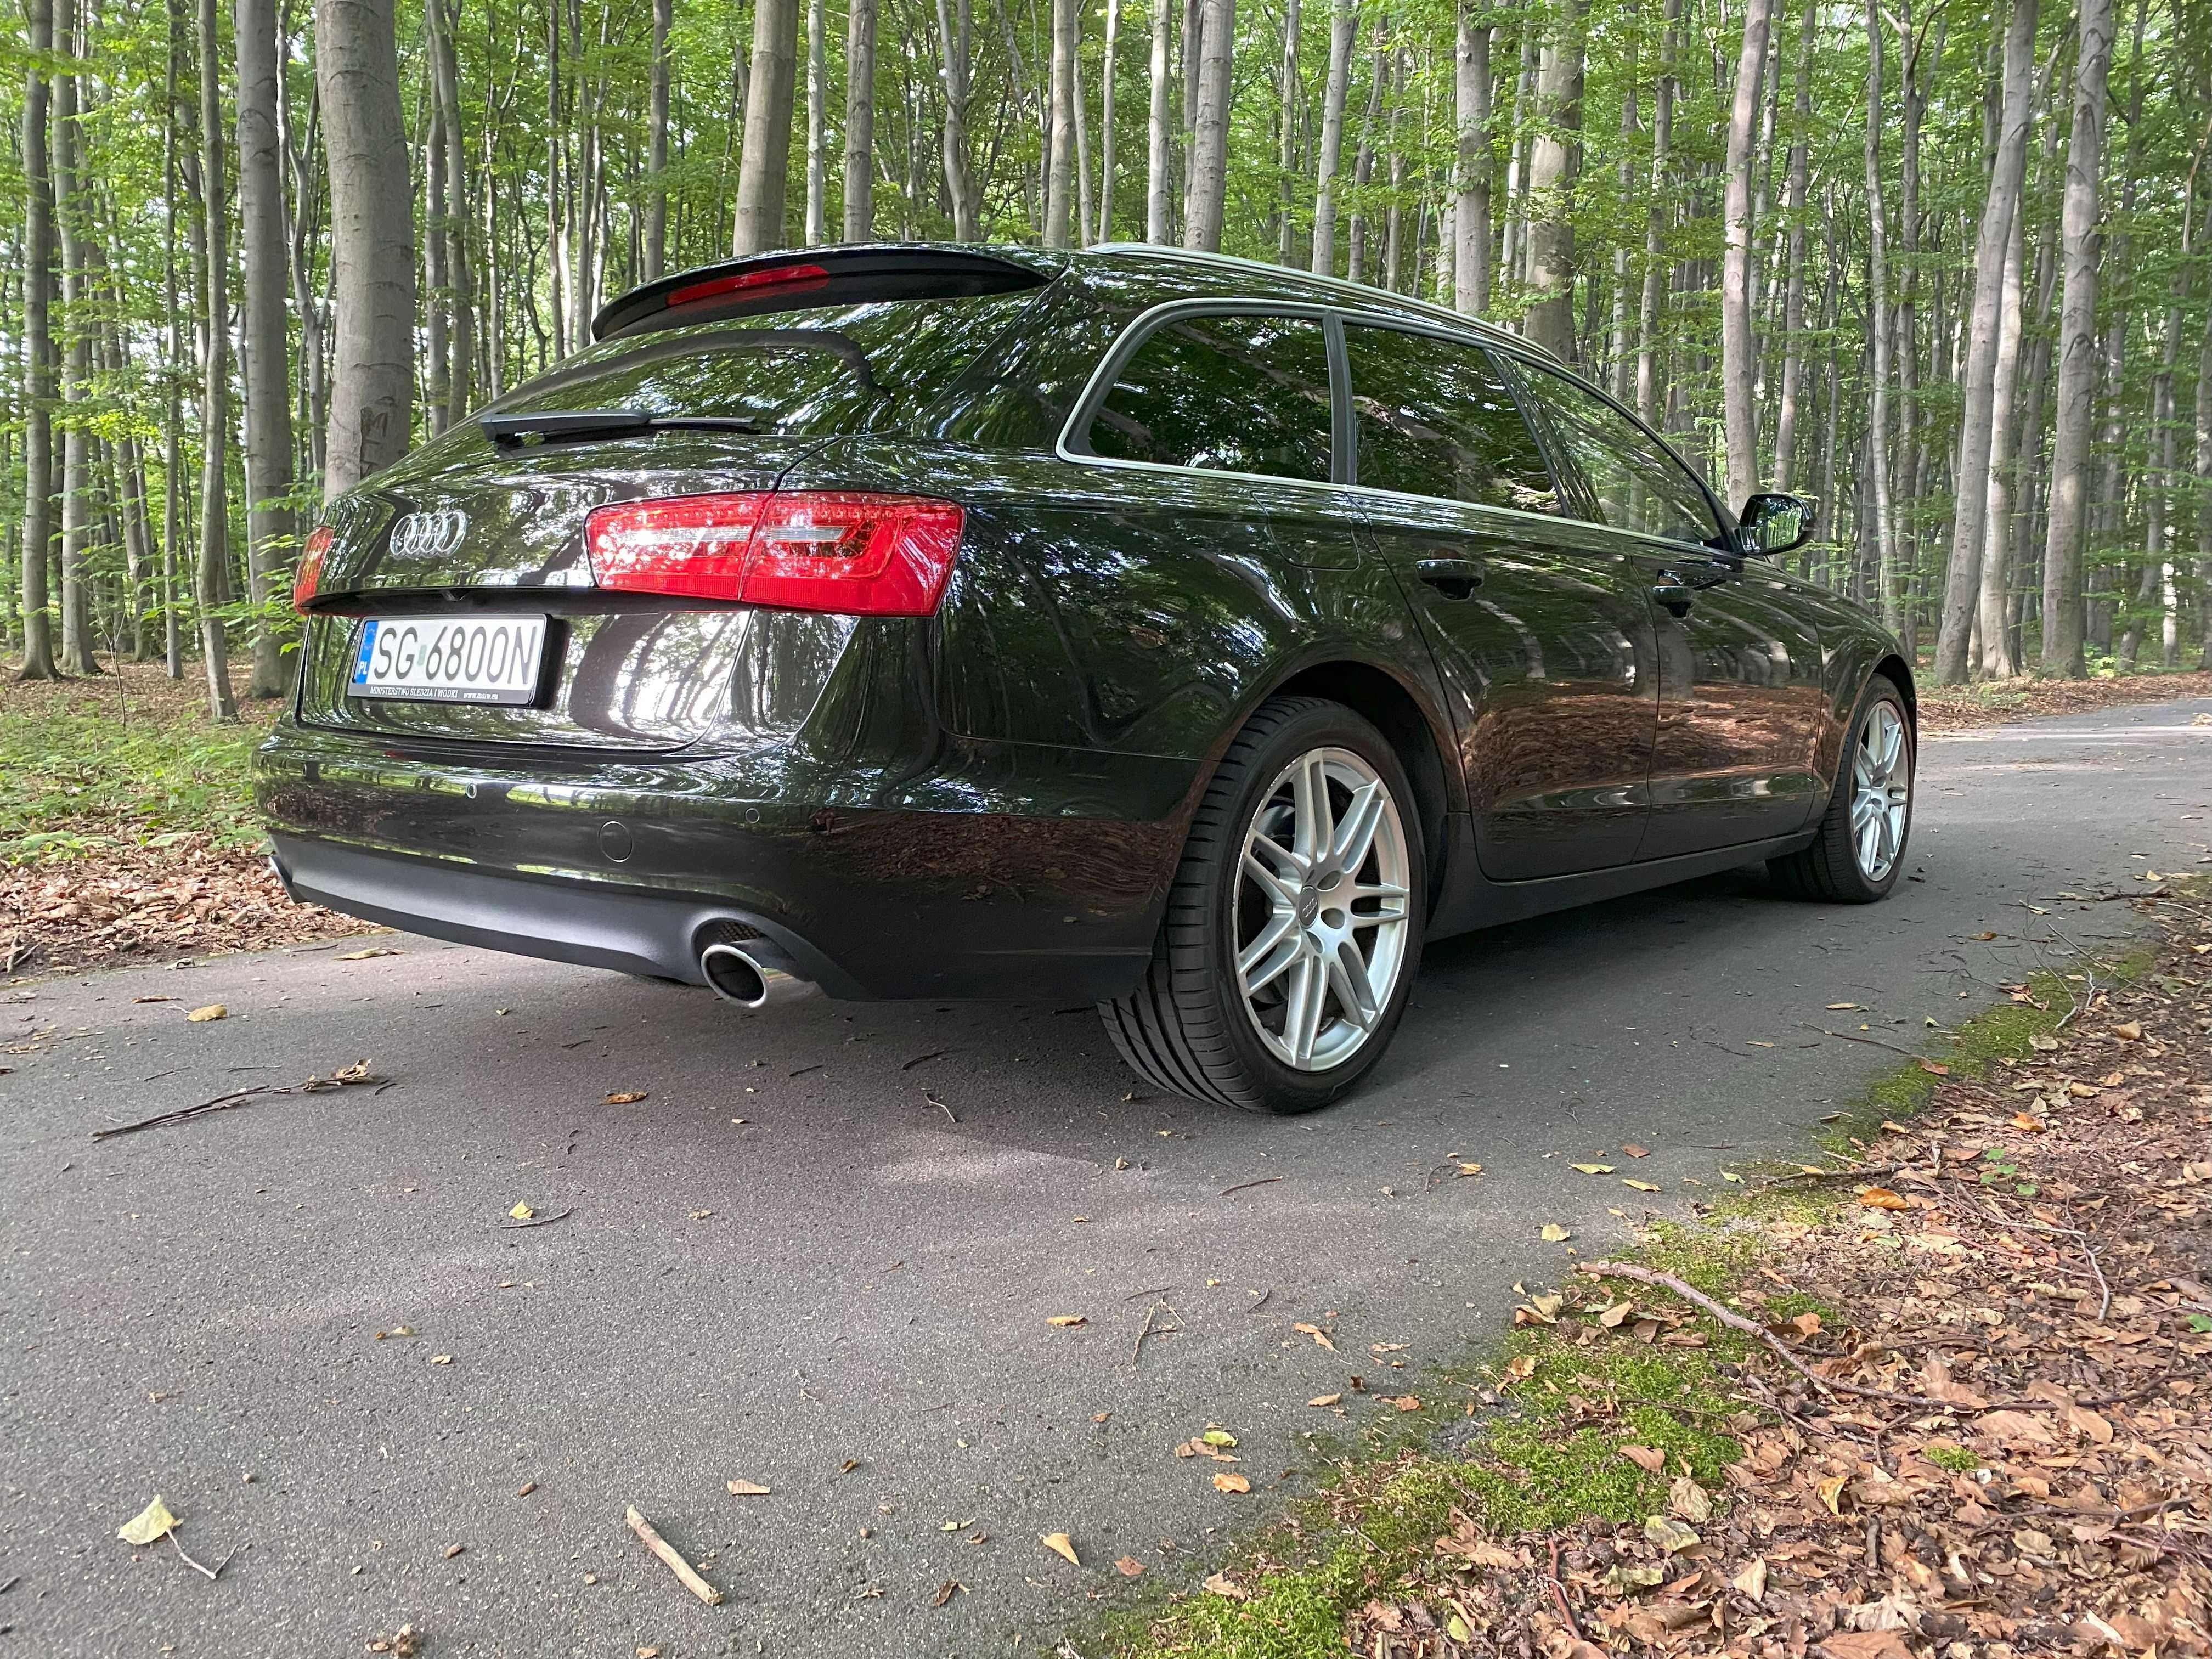 Audi A6 3.0 TDI 313 KM full skóra, pneumatyka, quattro